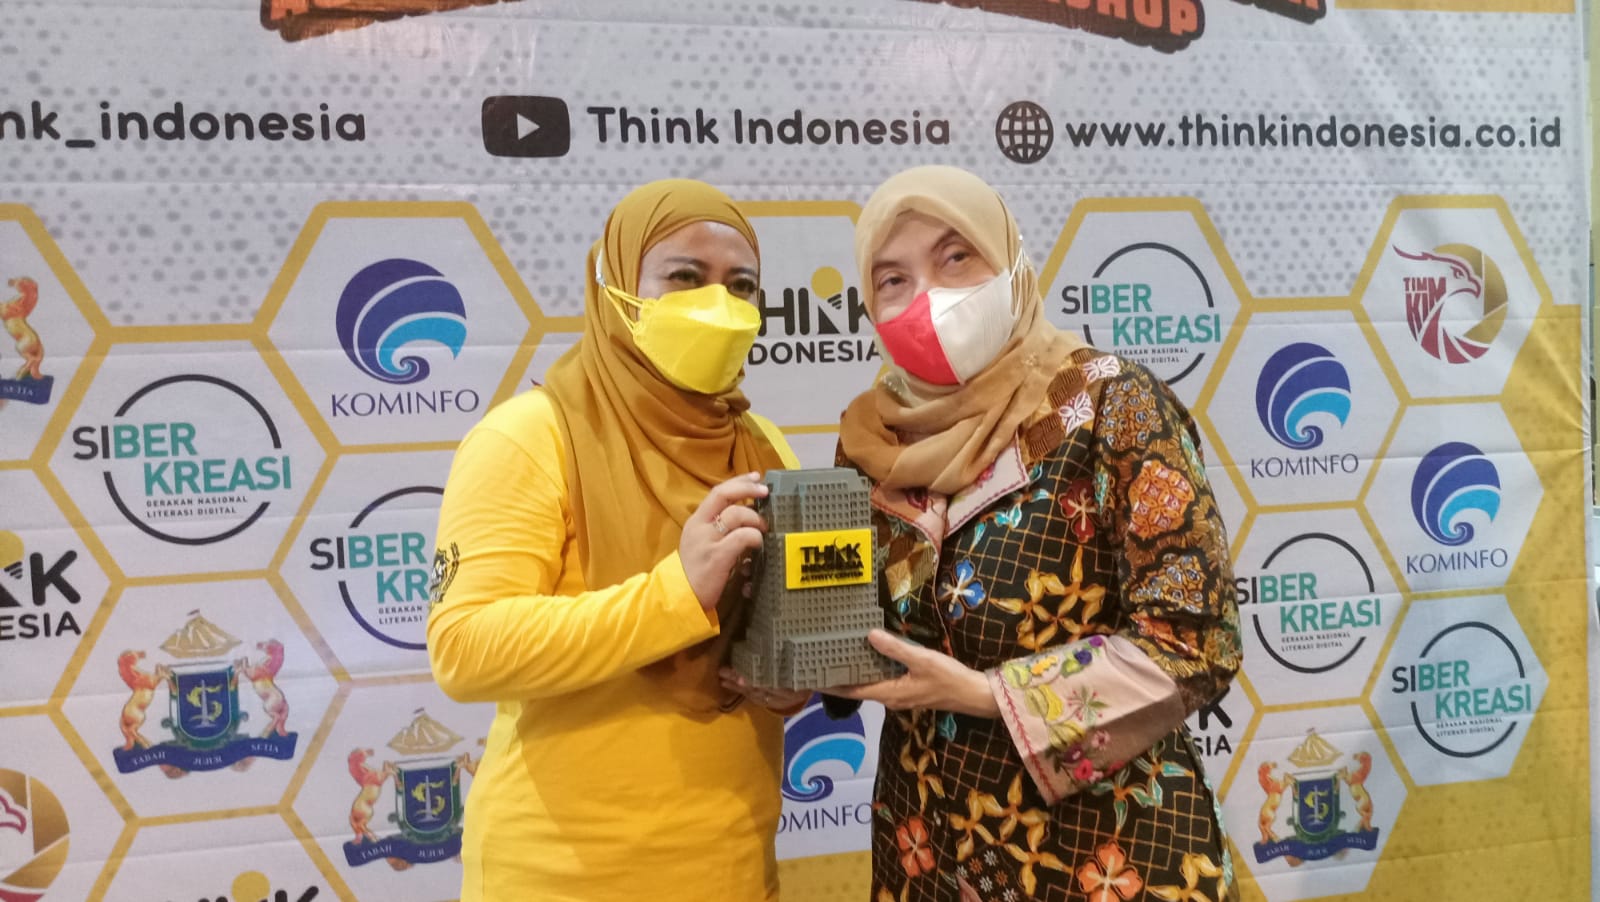 Peringati Hakteknas, Think Indonesia Launching Pusat Digitalisasi Pendidikan dan Marketing UMKM